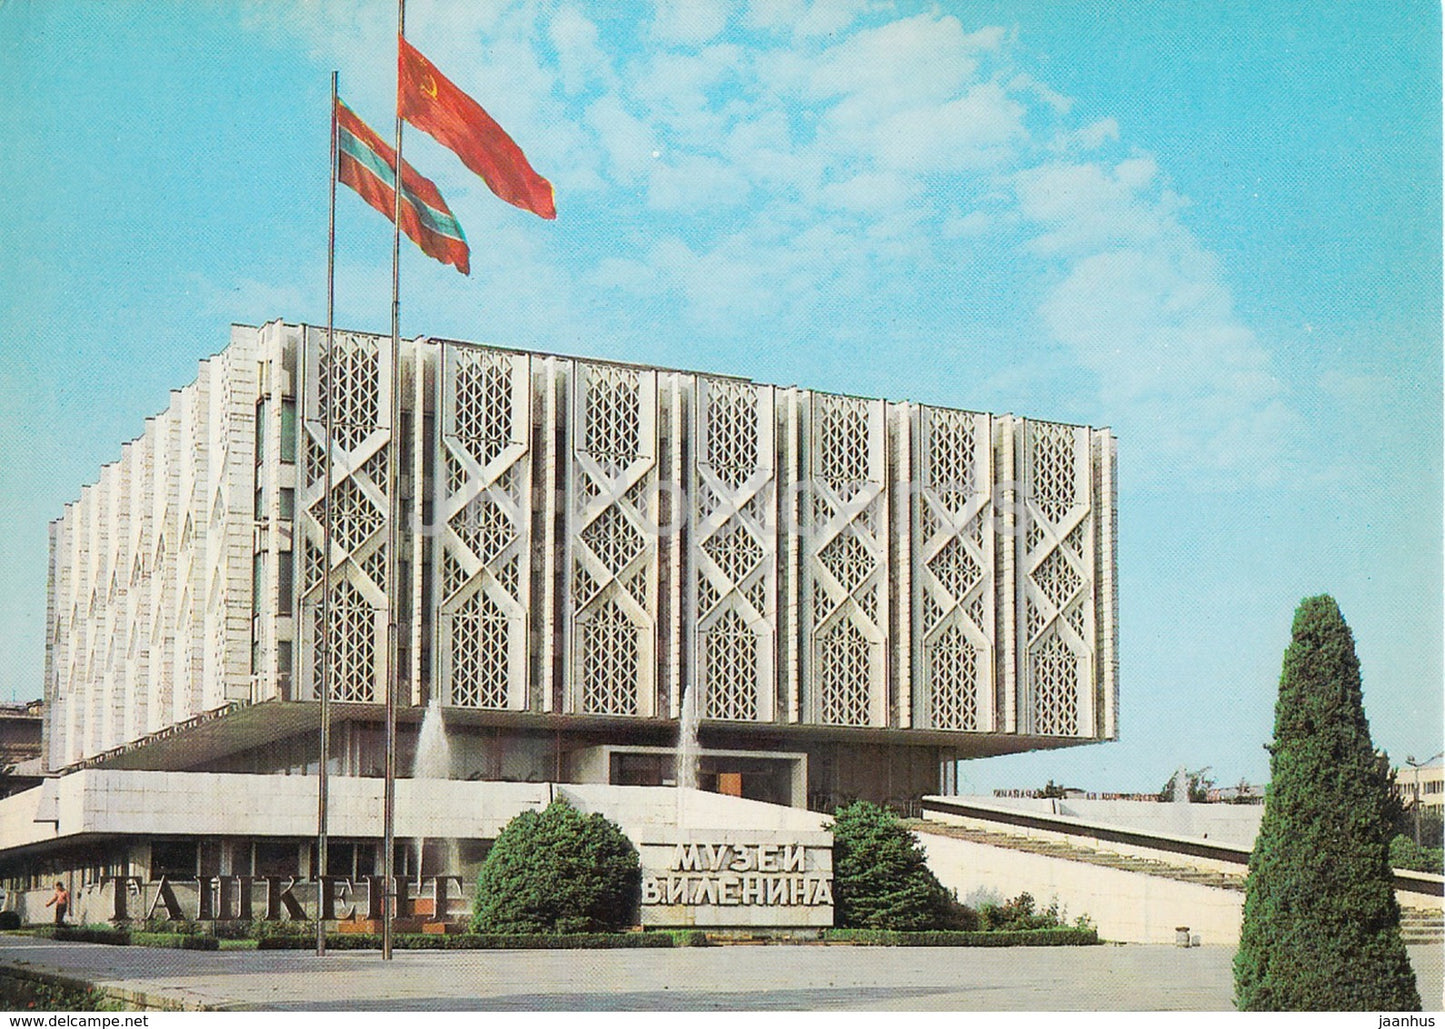 Tashkent - Branch of the Central Lenin Museum - 1983 - Uzbekistan USSR - unused - JH Postcards